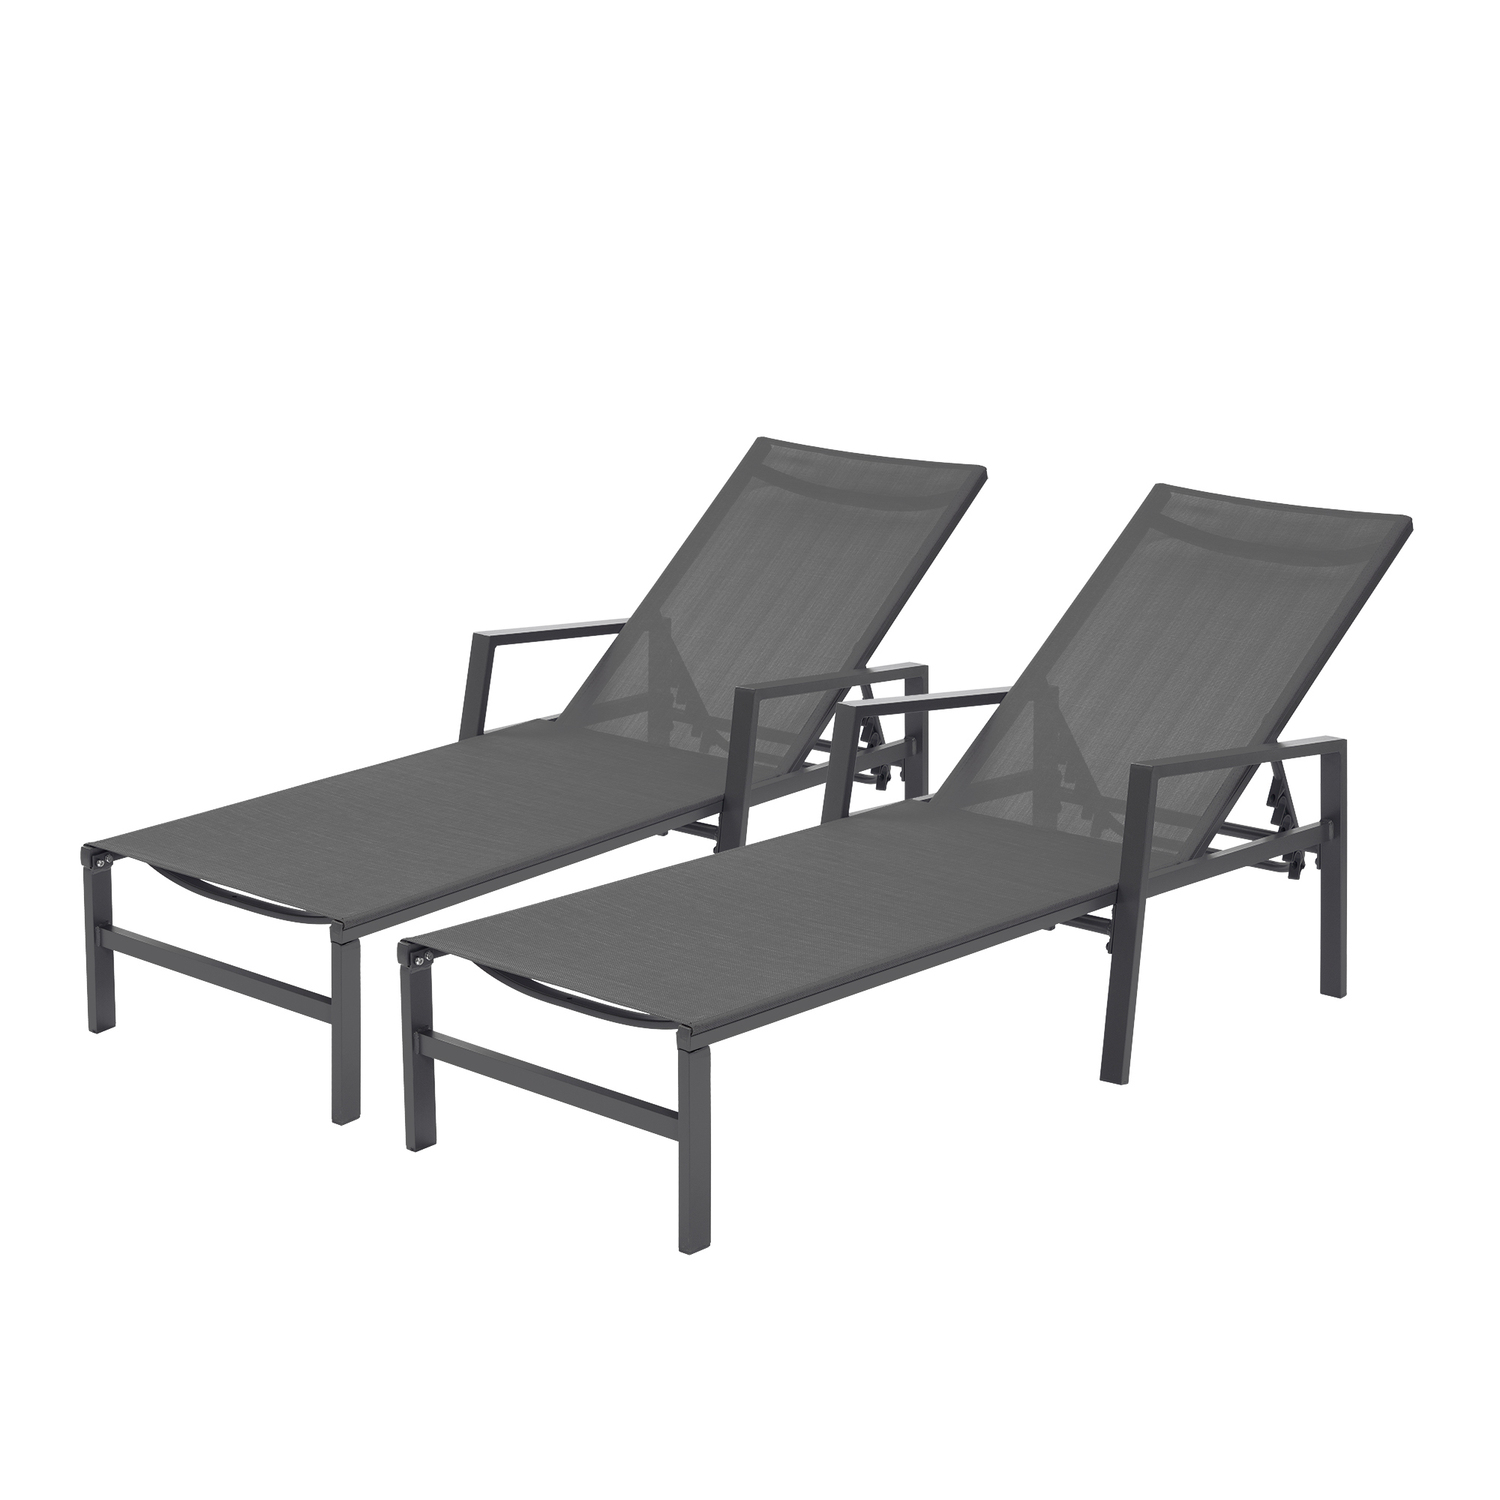 2 Pieces Set Patio Lounge Chair, Textilene Aluminum Pool Lounge Chair Set, Patio Chaise Lounges With Armrests For Patio Backyard Porch Garden Poolside - image 2 of 9